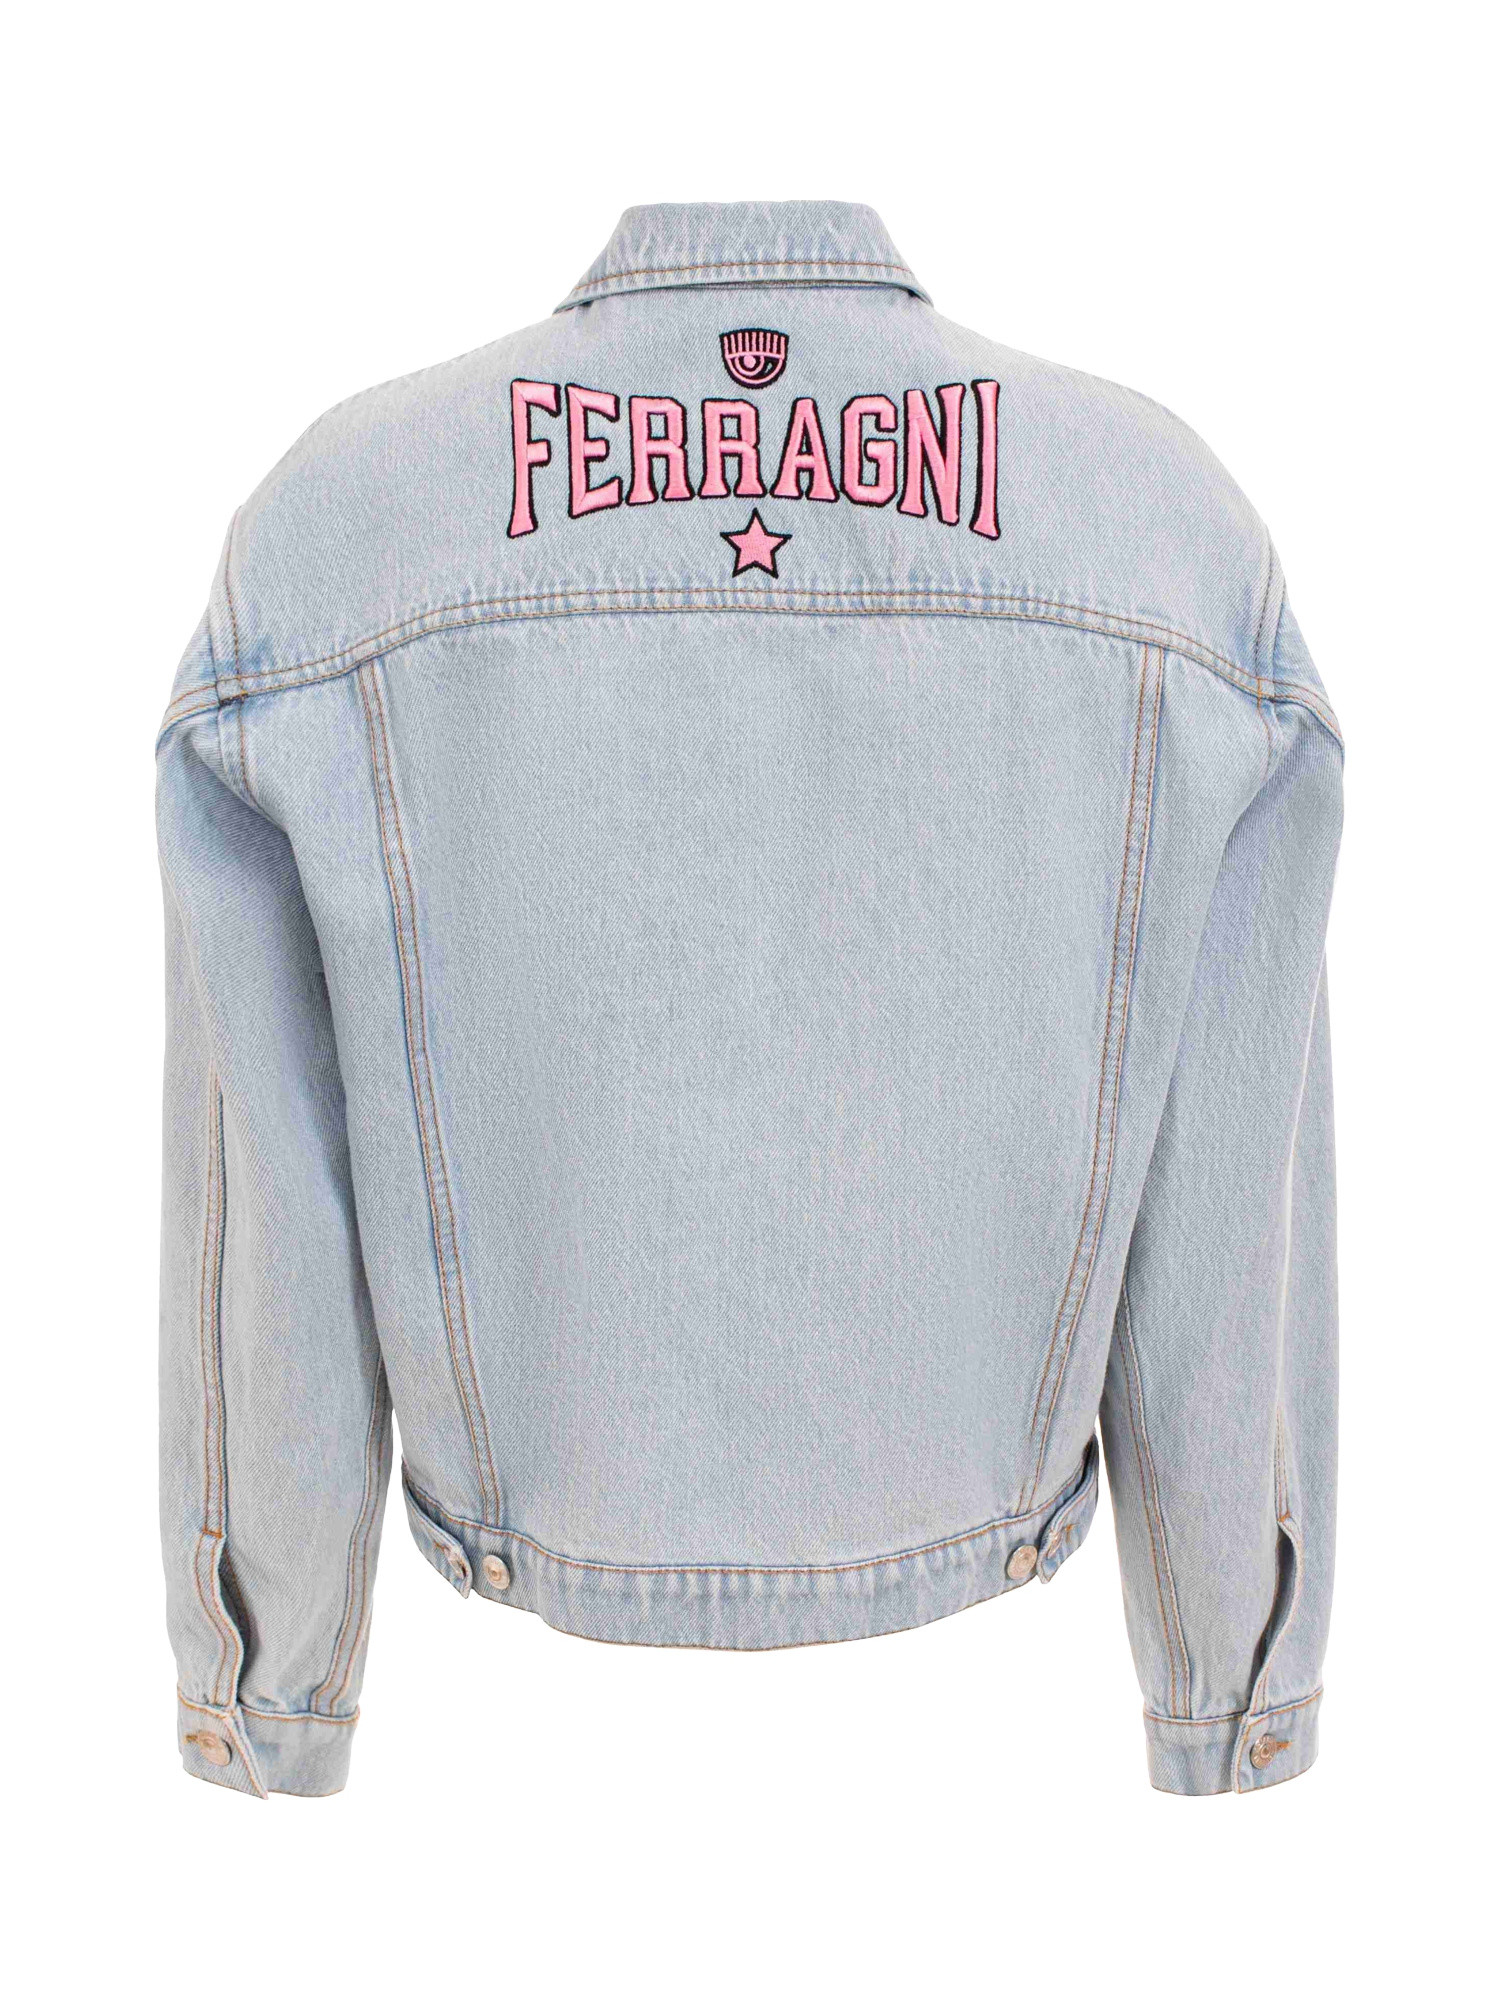 Chiara Ferragni - Denim jacket with writing on the back, Denim, large image number 1